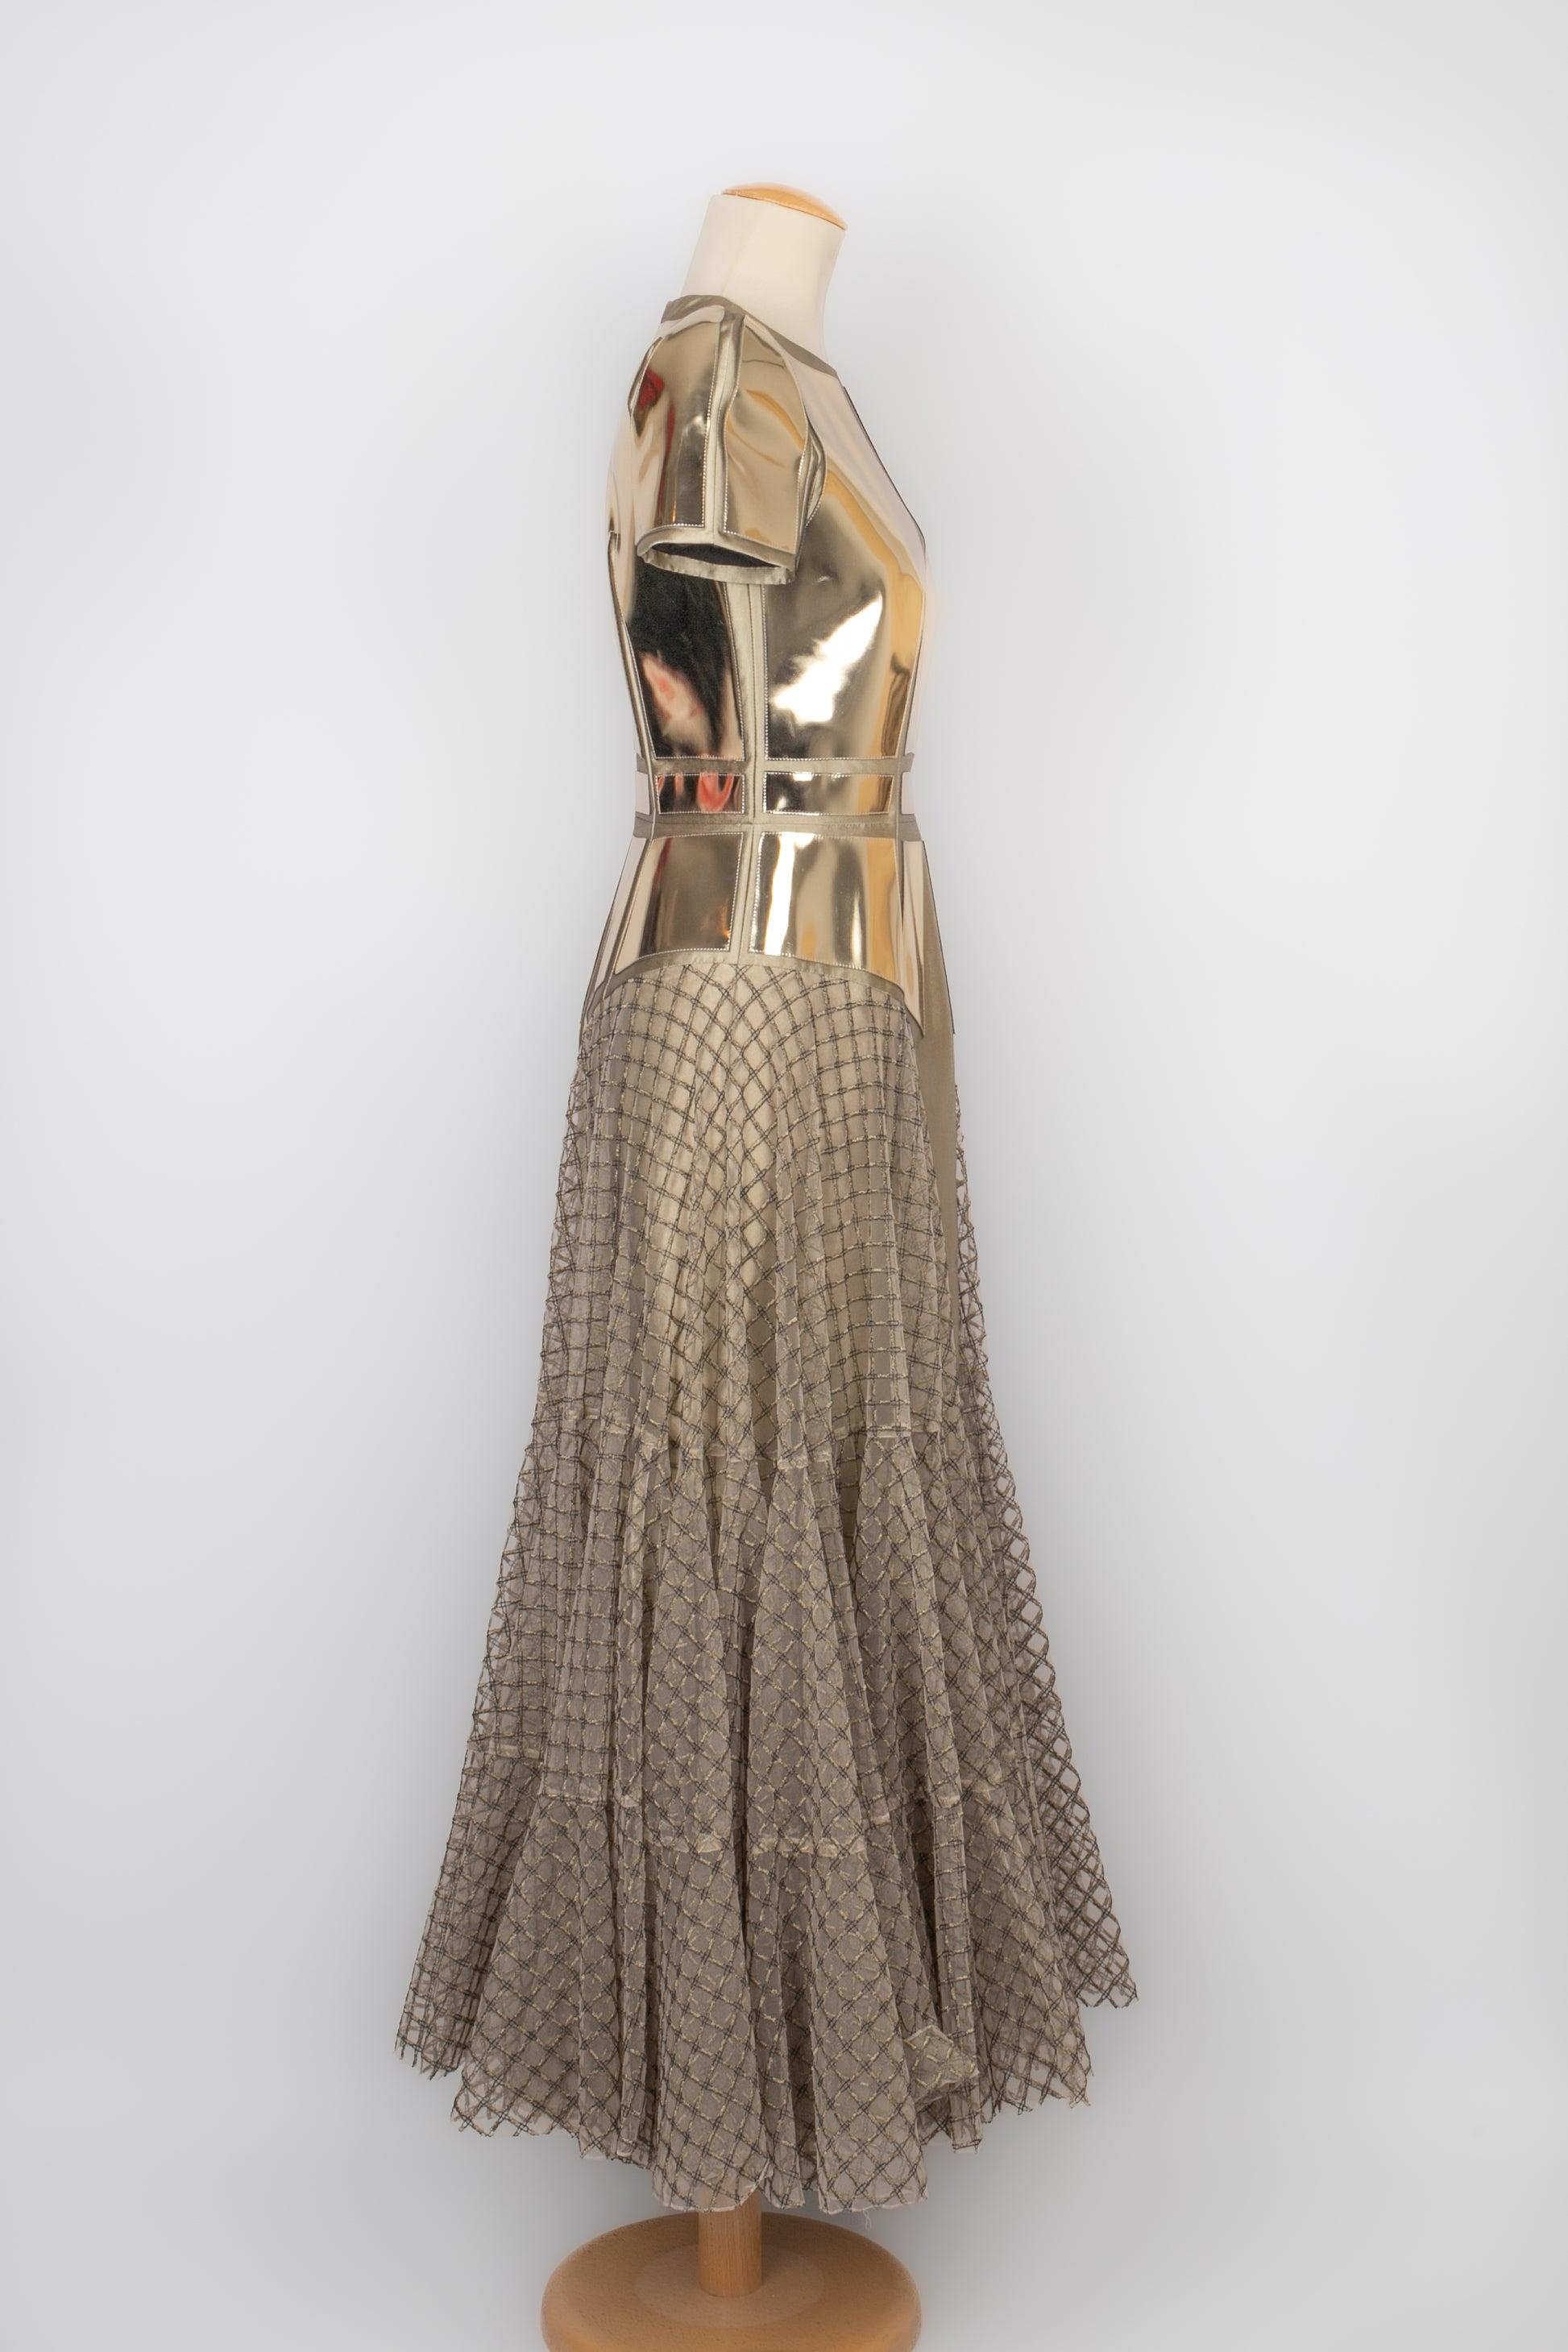 Paule Ka - Fishnet, taffeta and vinyl golden dress. Size 38FR.

Additional information:
Condition: Very good condition
Dimensions: Shoulder width: 38 cm - Chest: 40 cm - Waist: 34 cm - Sleeve length: 17 cm - Length: 130 cm

Seller Reference: VR365